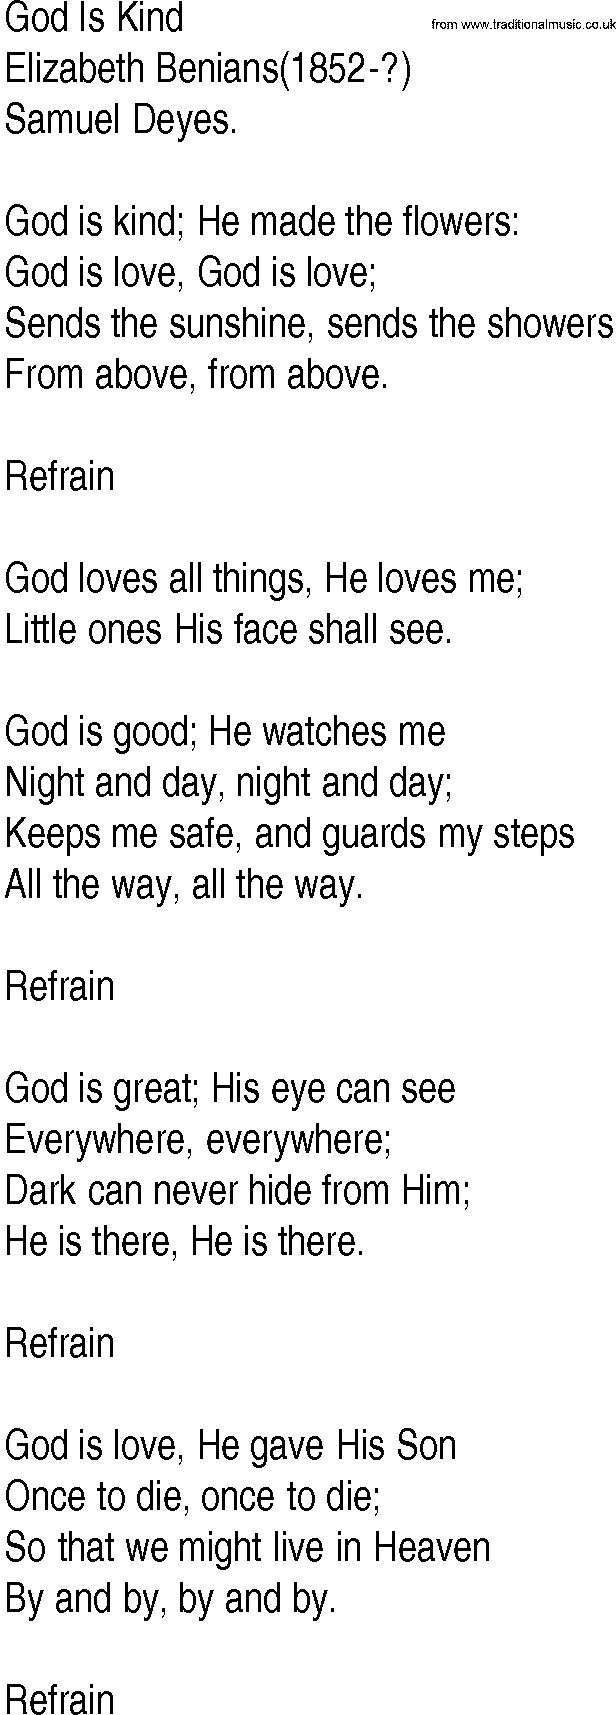 Hymn and Gospel Song: God Is Kind by Elizabeth Benians lyrics